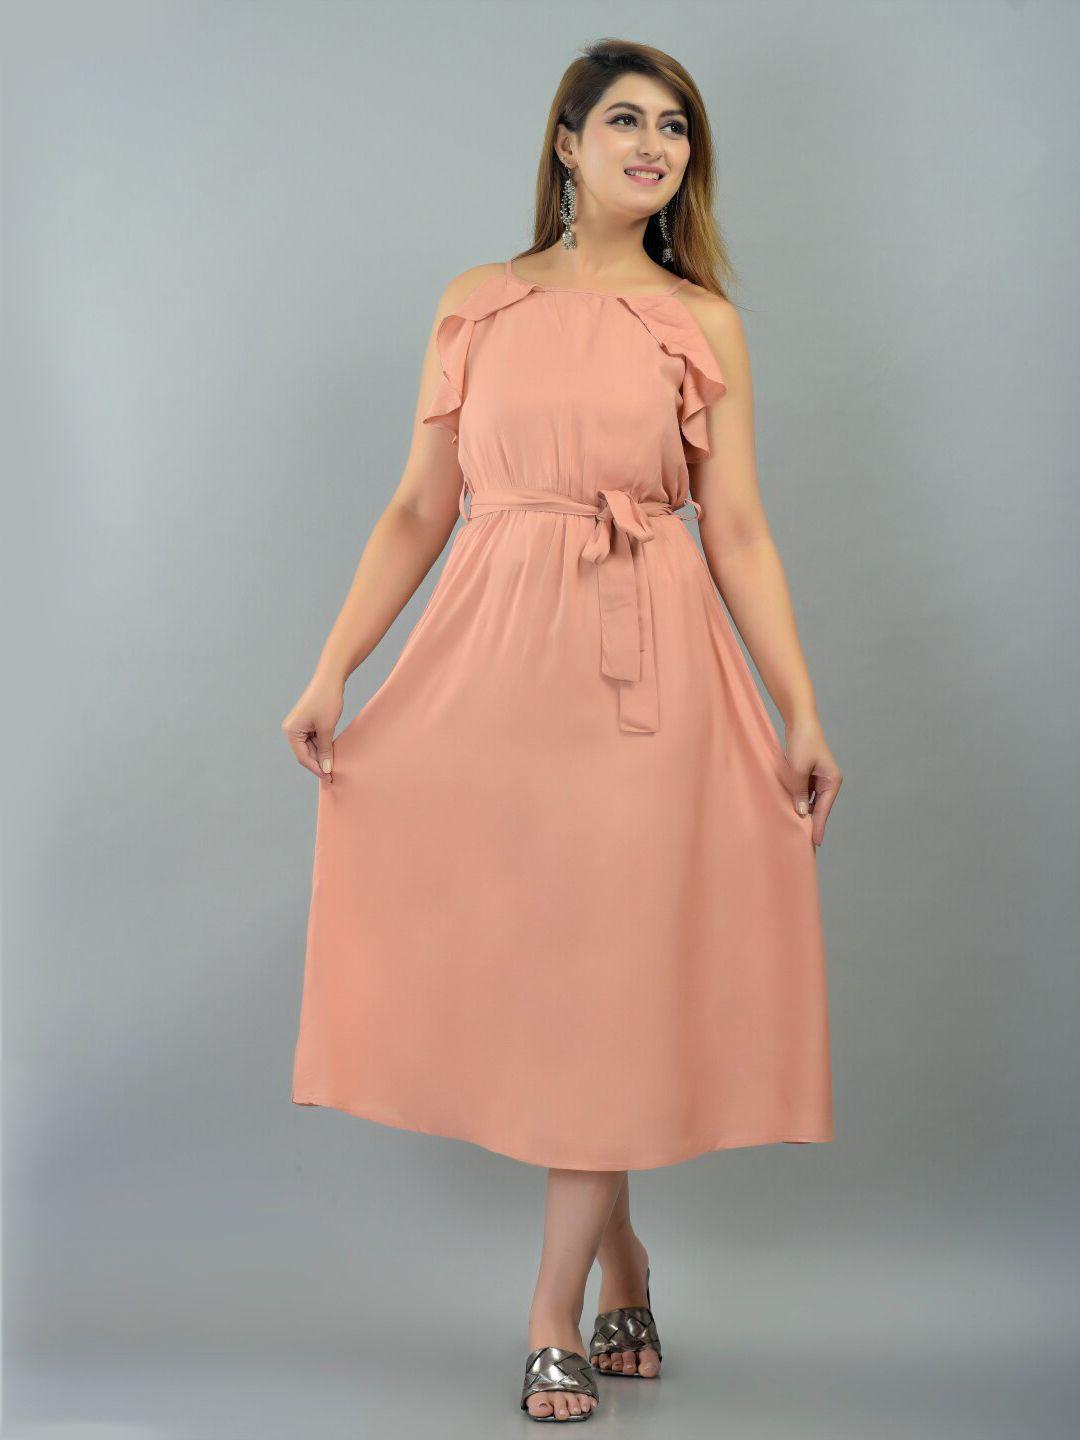 iqraar peach-coloured off-shoulder midi dress